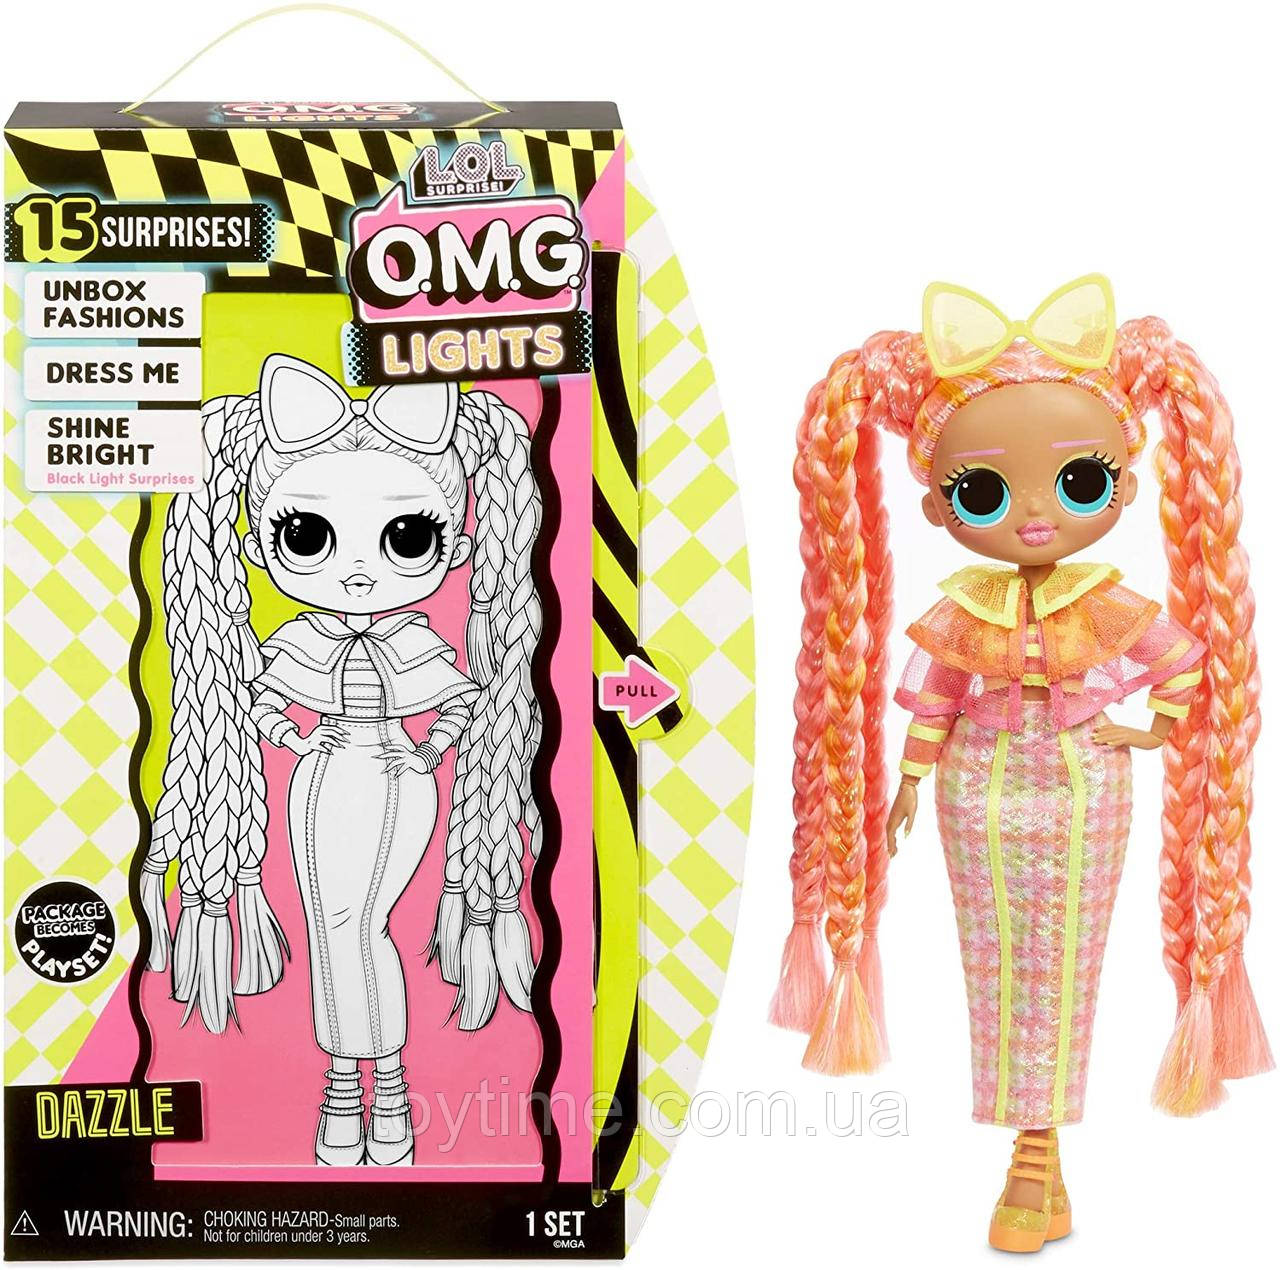 ЛОЛ ОМГ Lights Блискуча королева/L.O.L. Surprise! O.M.G. Lights Dazzle Fashion Doll